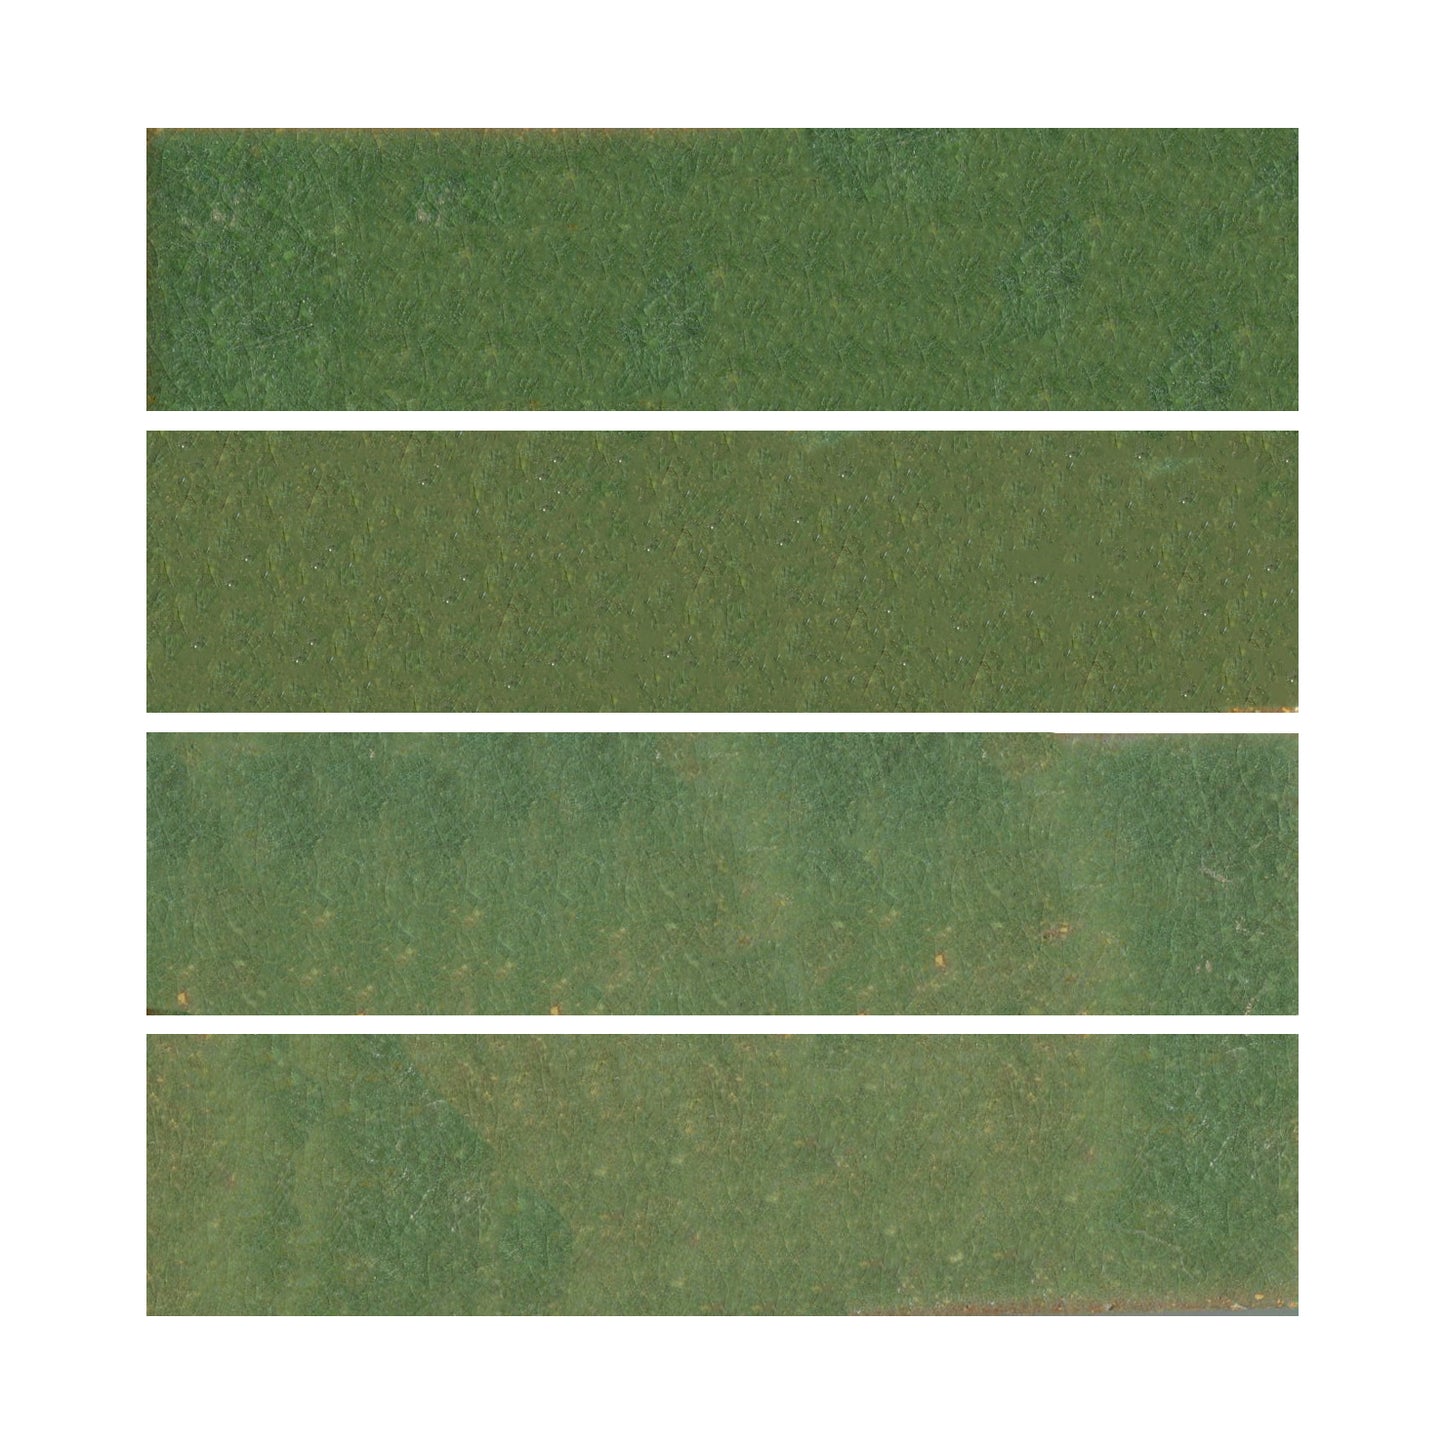 Avocado green 2x8 field tile